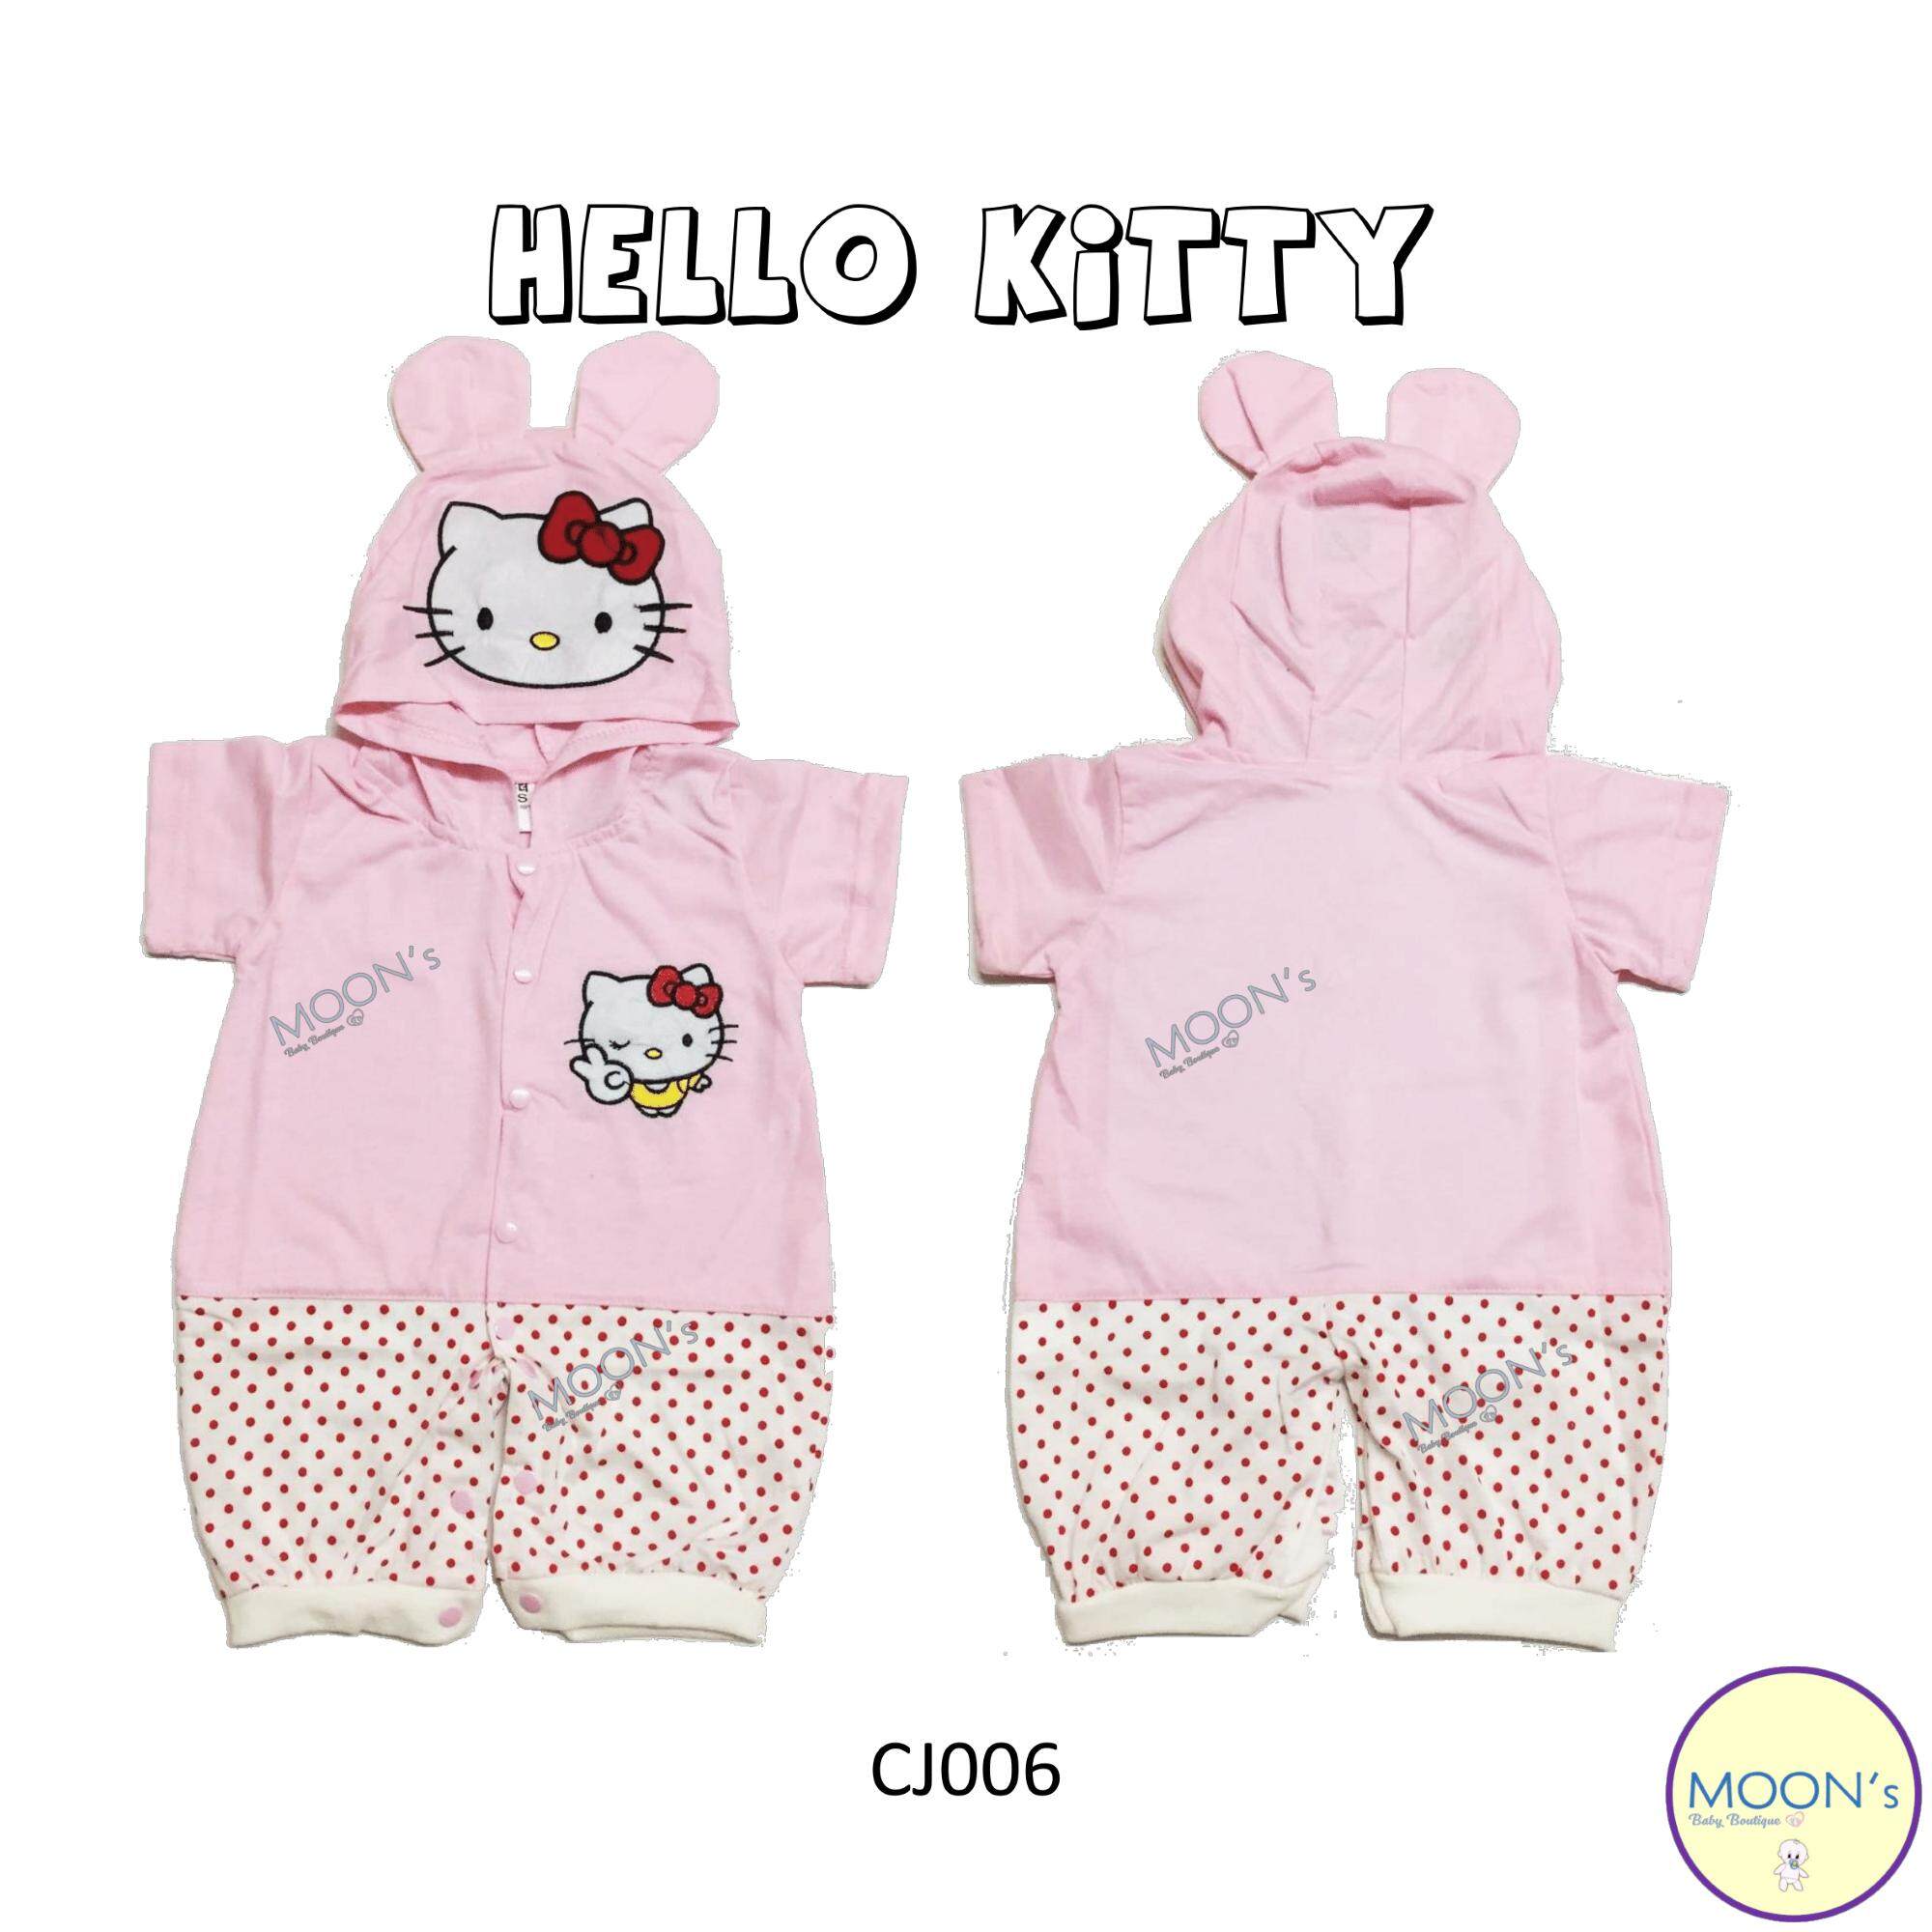 Costume Jumper - Hello Kitty toys for girls